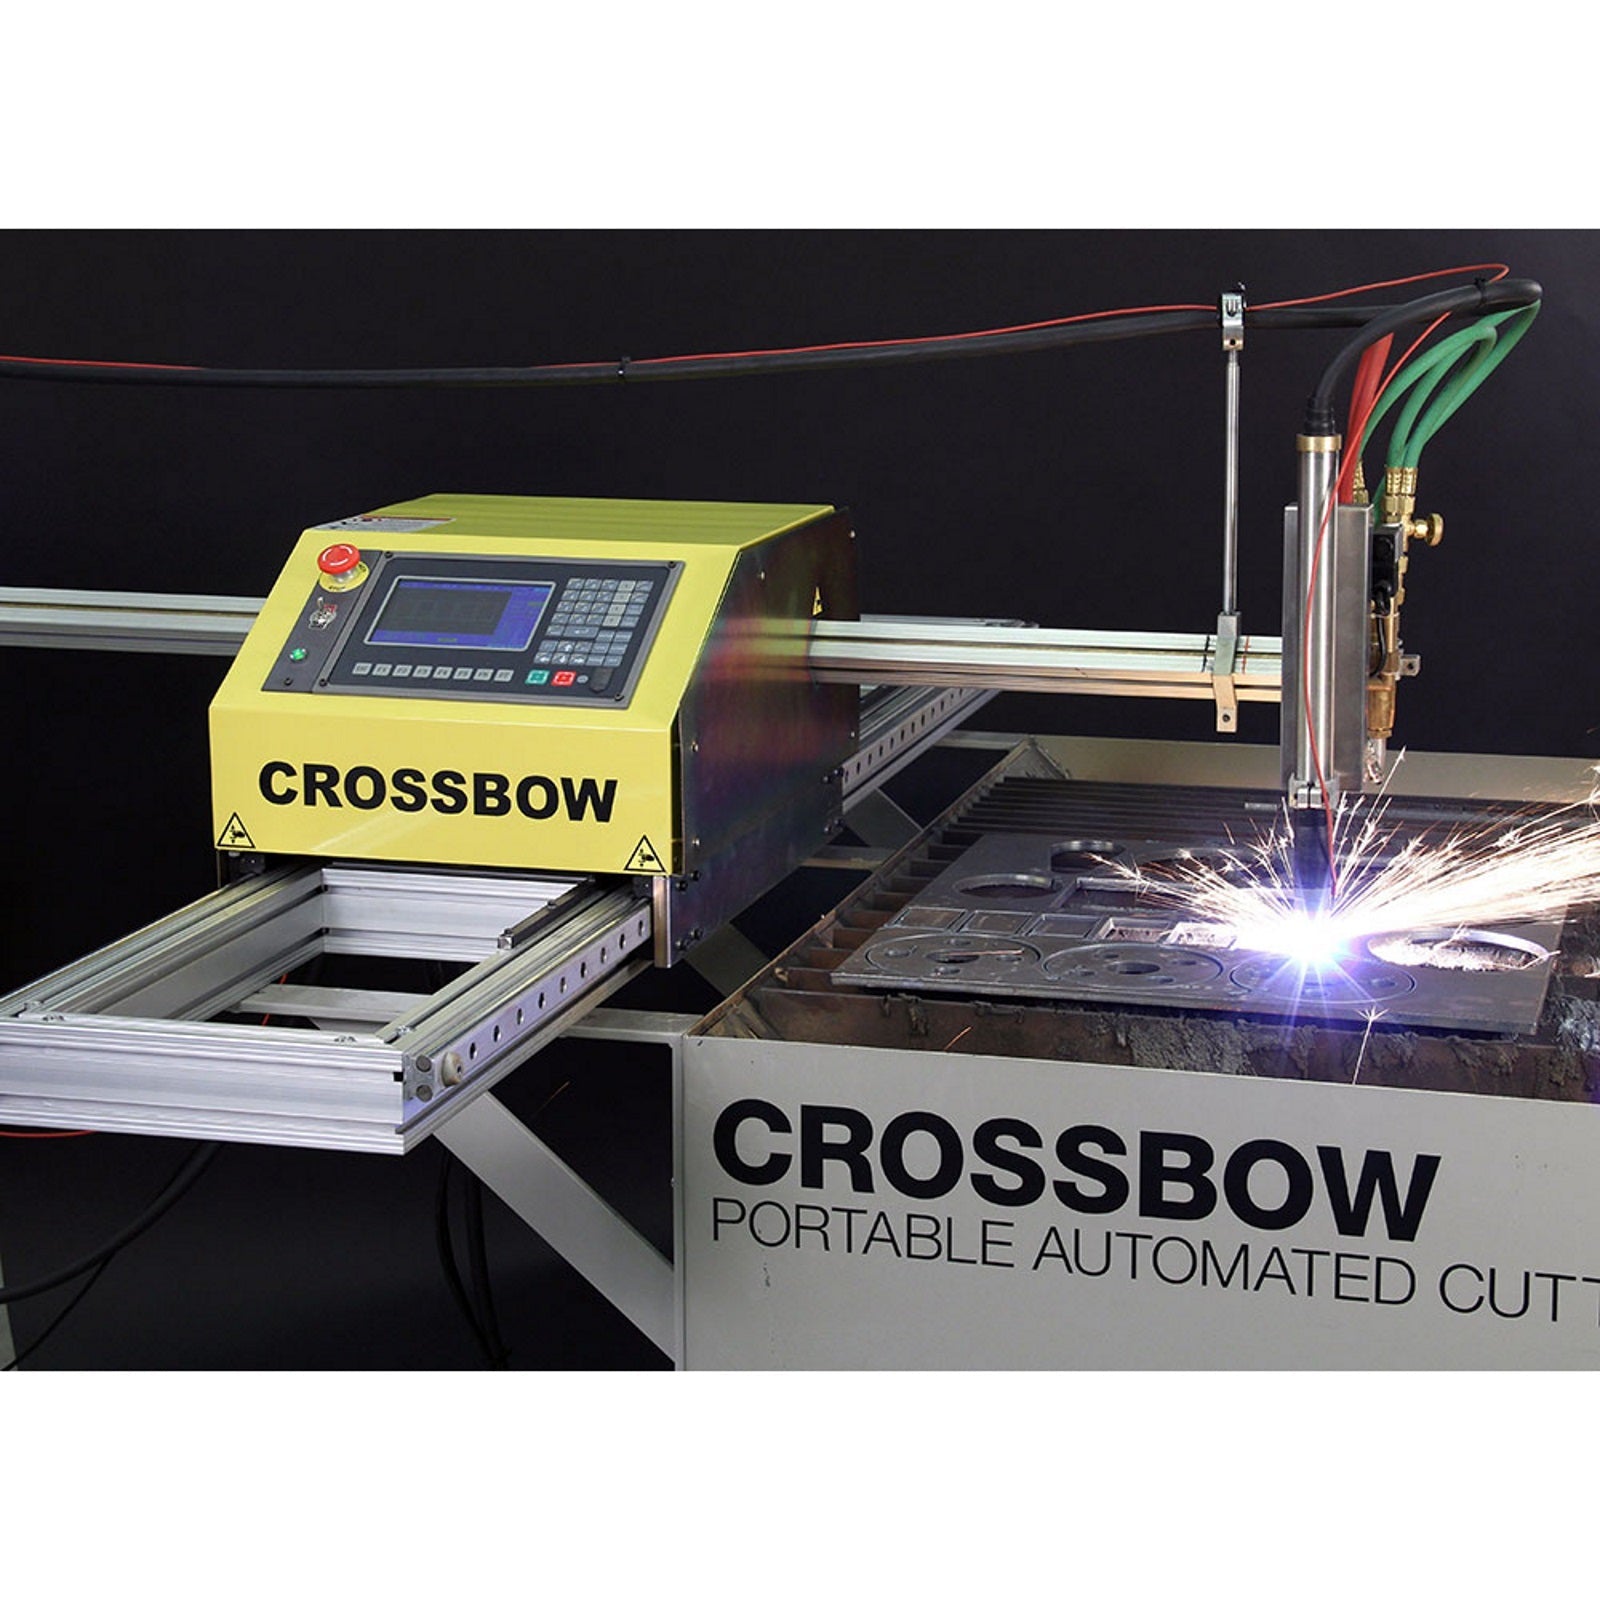 ESAB Crossbow Plasma CNC Cutting System 4ft x 4ft (0560954394)